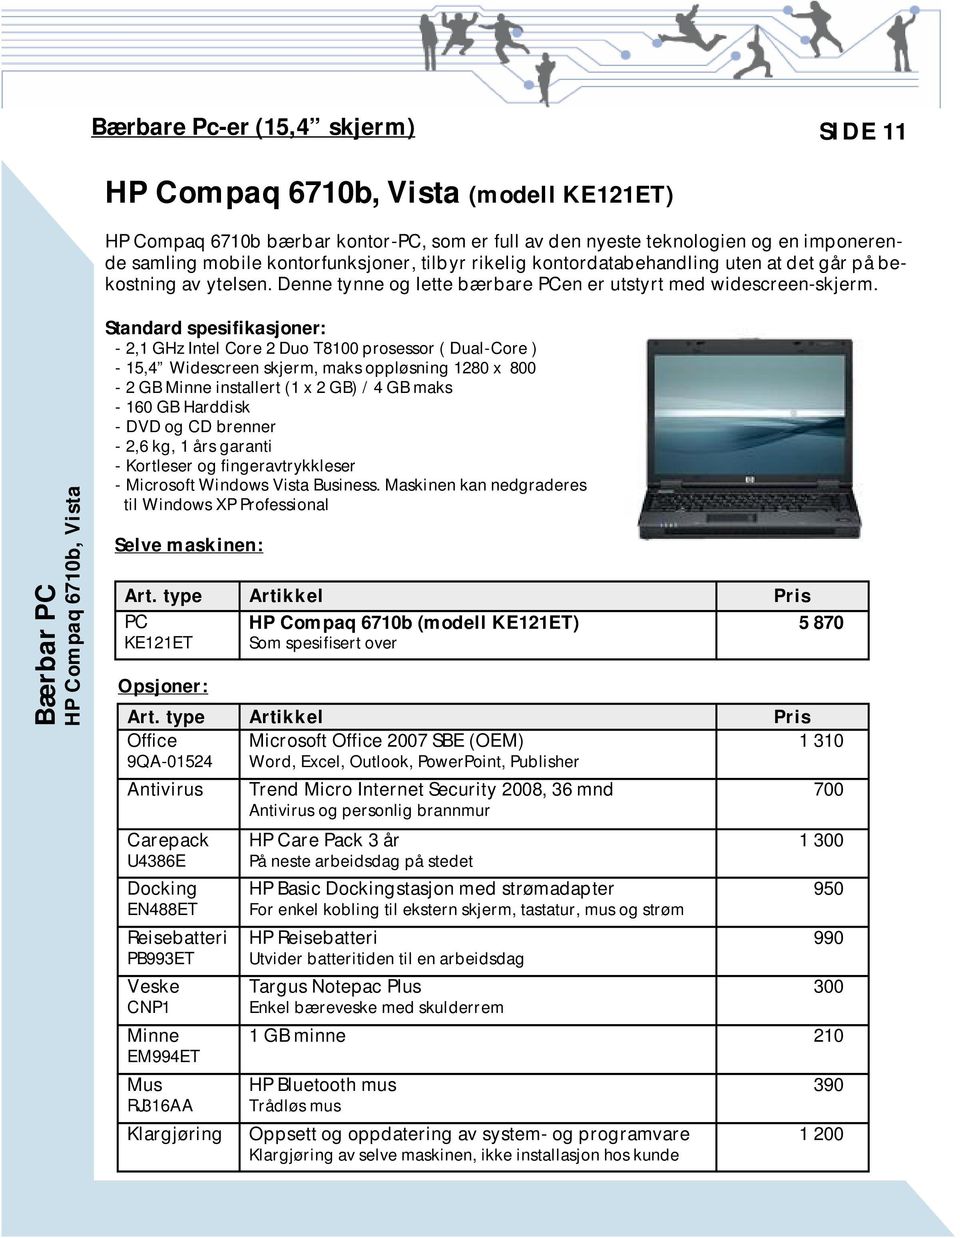 Bærbar PC HP Compaq 6710b, Vista Standard spesifikasjoner: - 2,1 GHz Intel Core 2 Duo T8100 prosessor ( Dual-Core ) - 15,4 Widescreen skjerm, maks oppløsning 1280 x 800-2 GB Minne installert (1 x 2